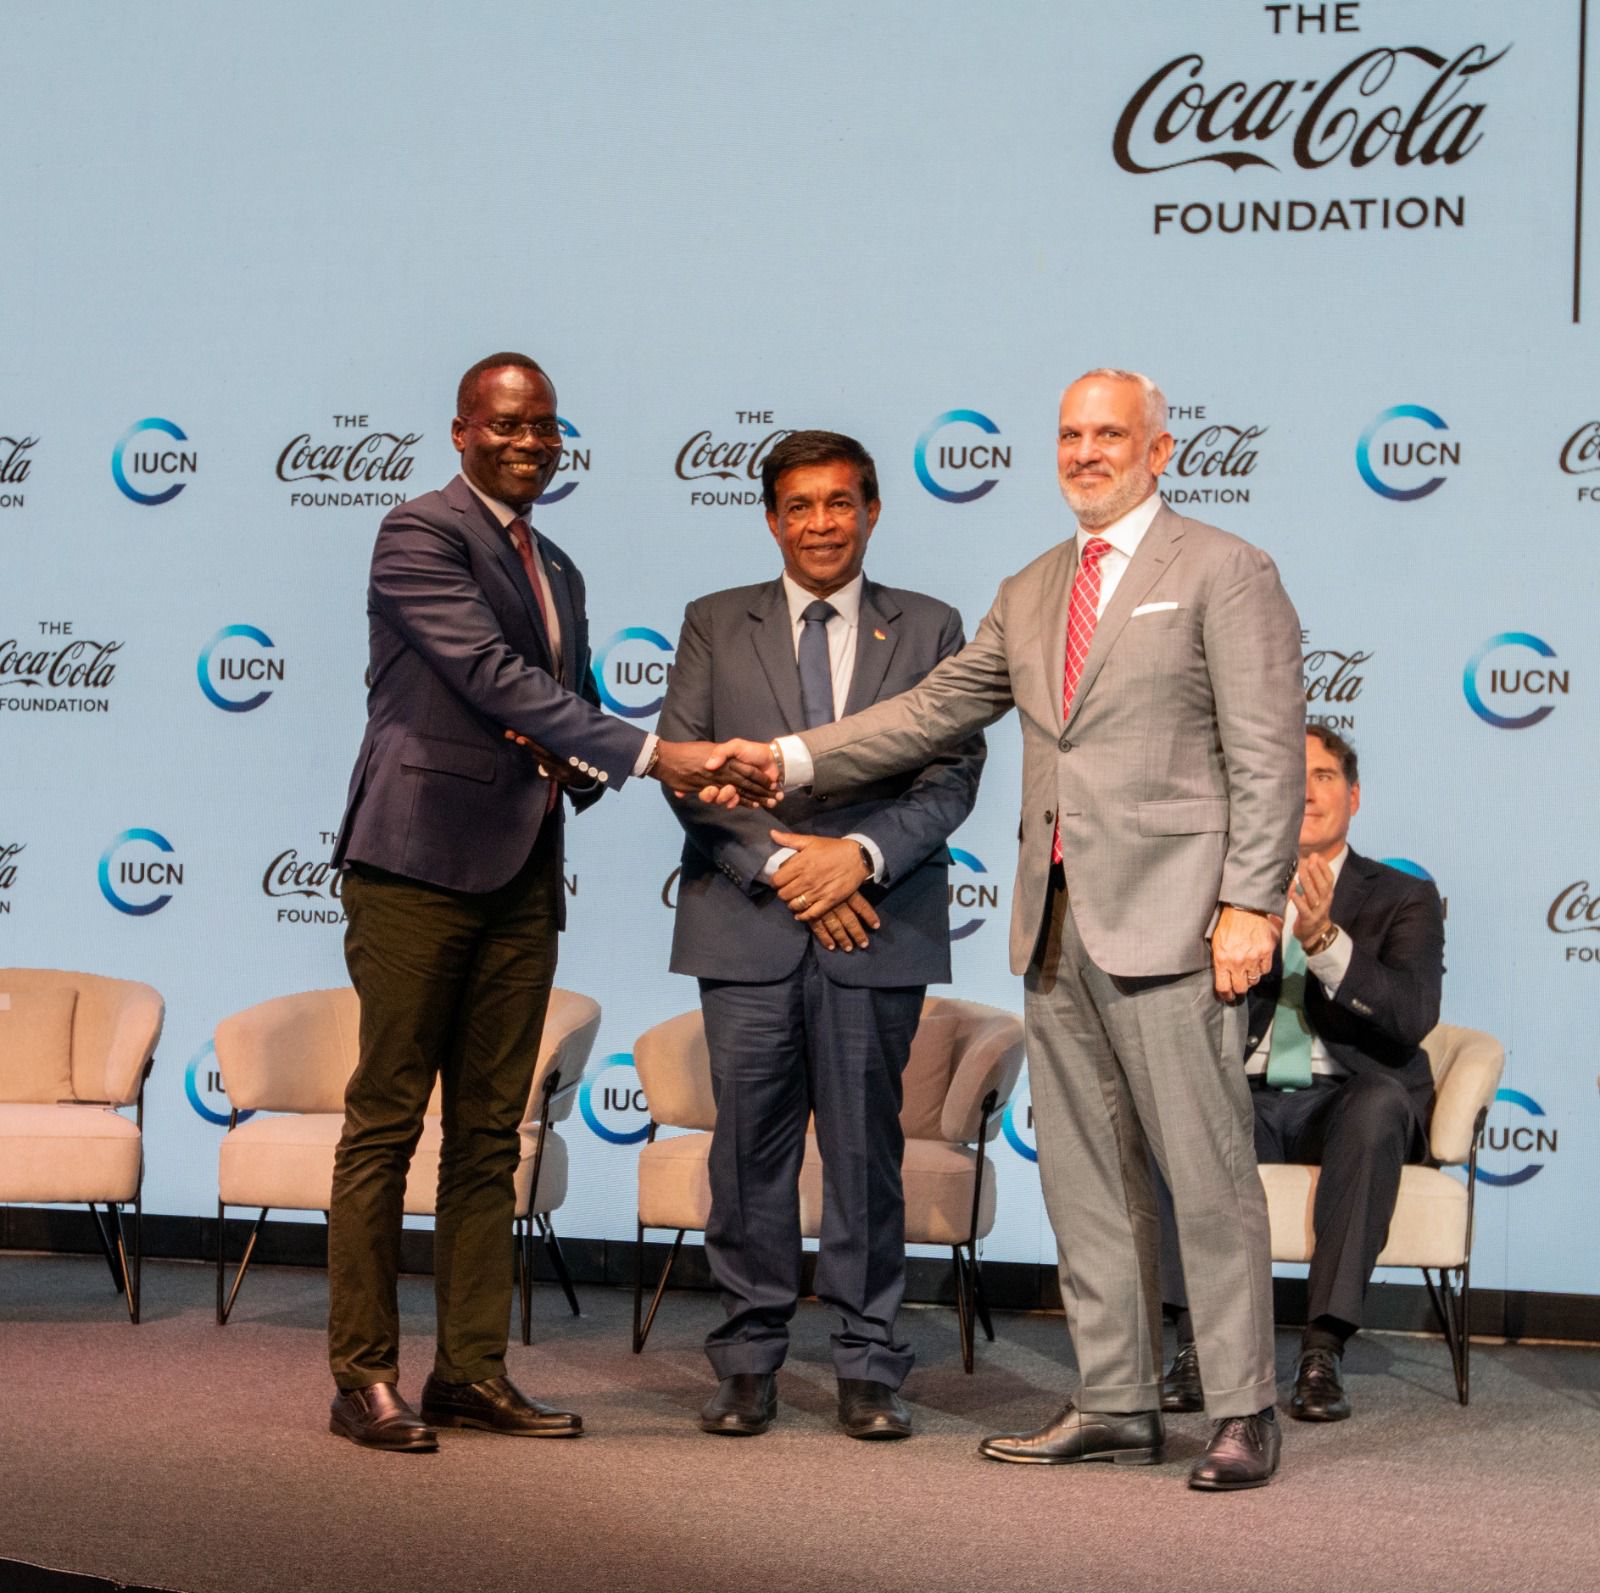 A handshake between IUCN ESARO and the Coca-Cola Foundation Heads